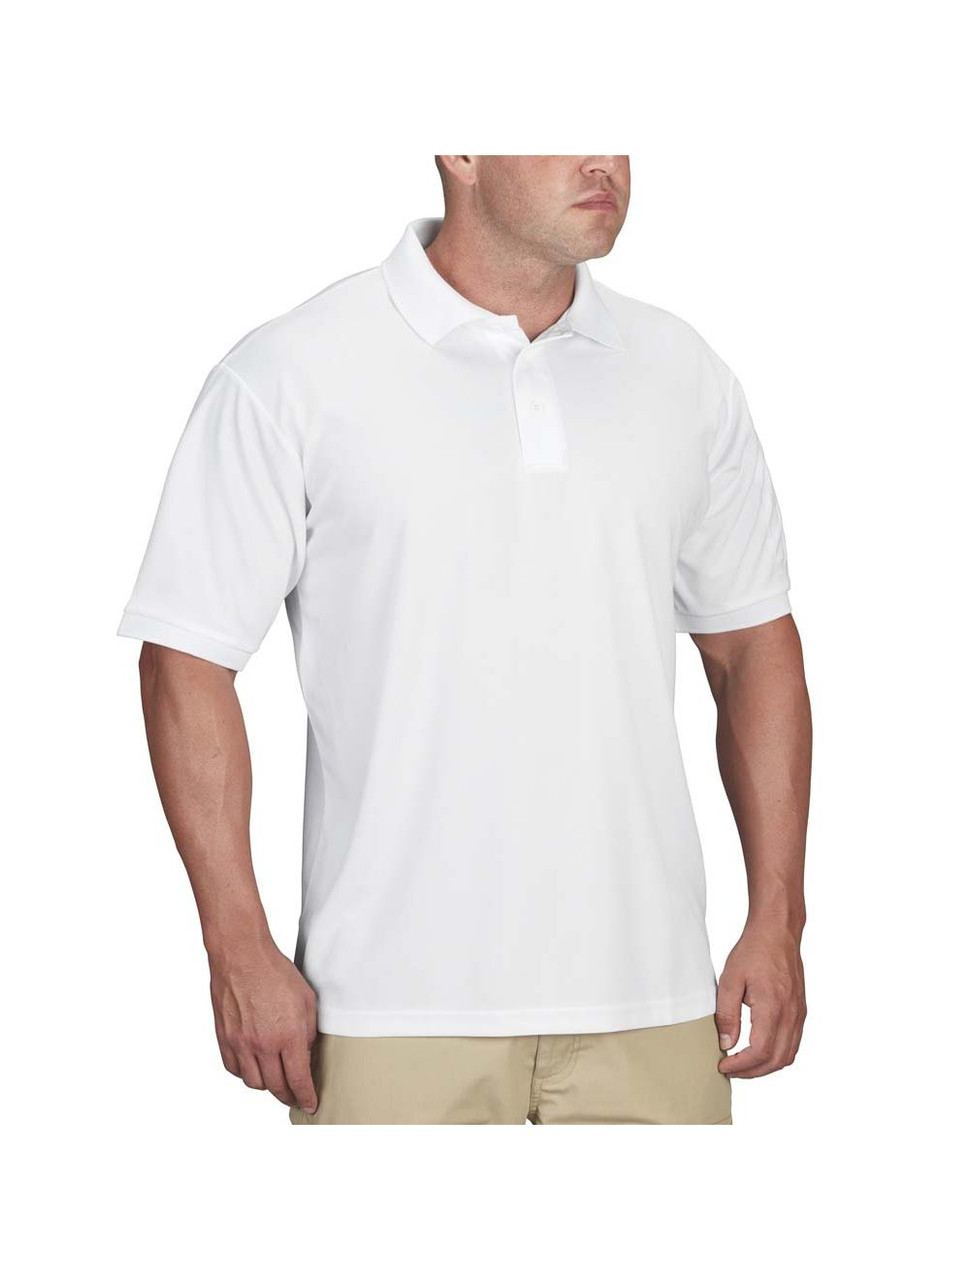 Men's Uniform Polo - Short Sleeve